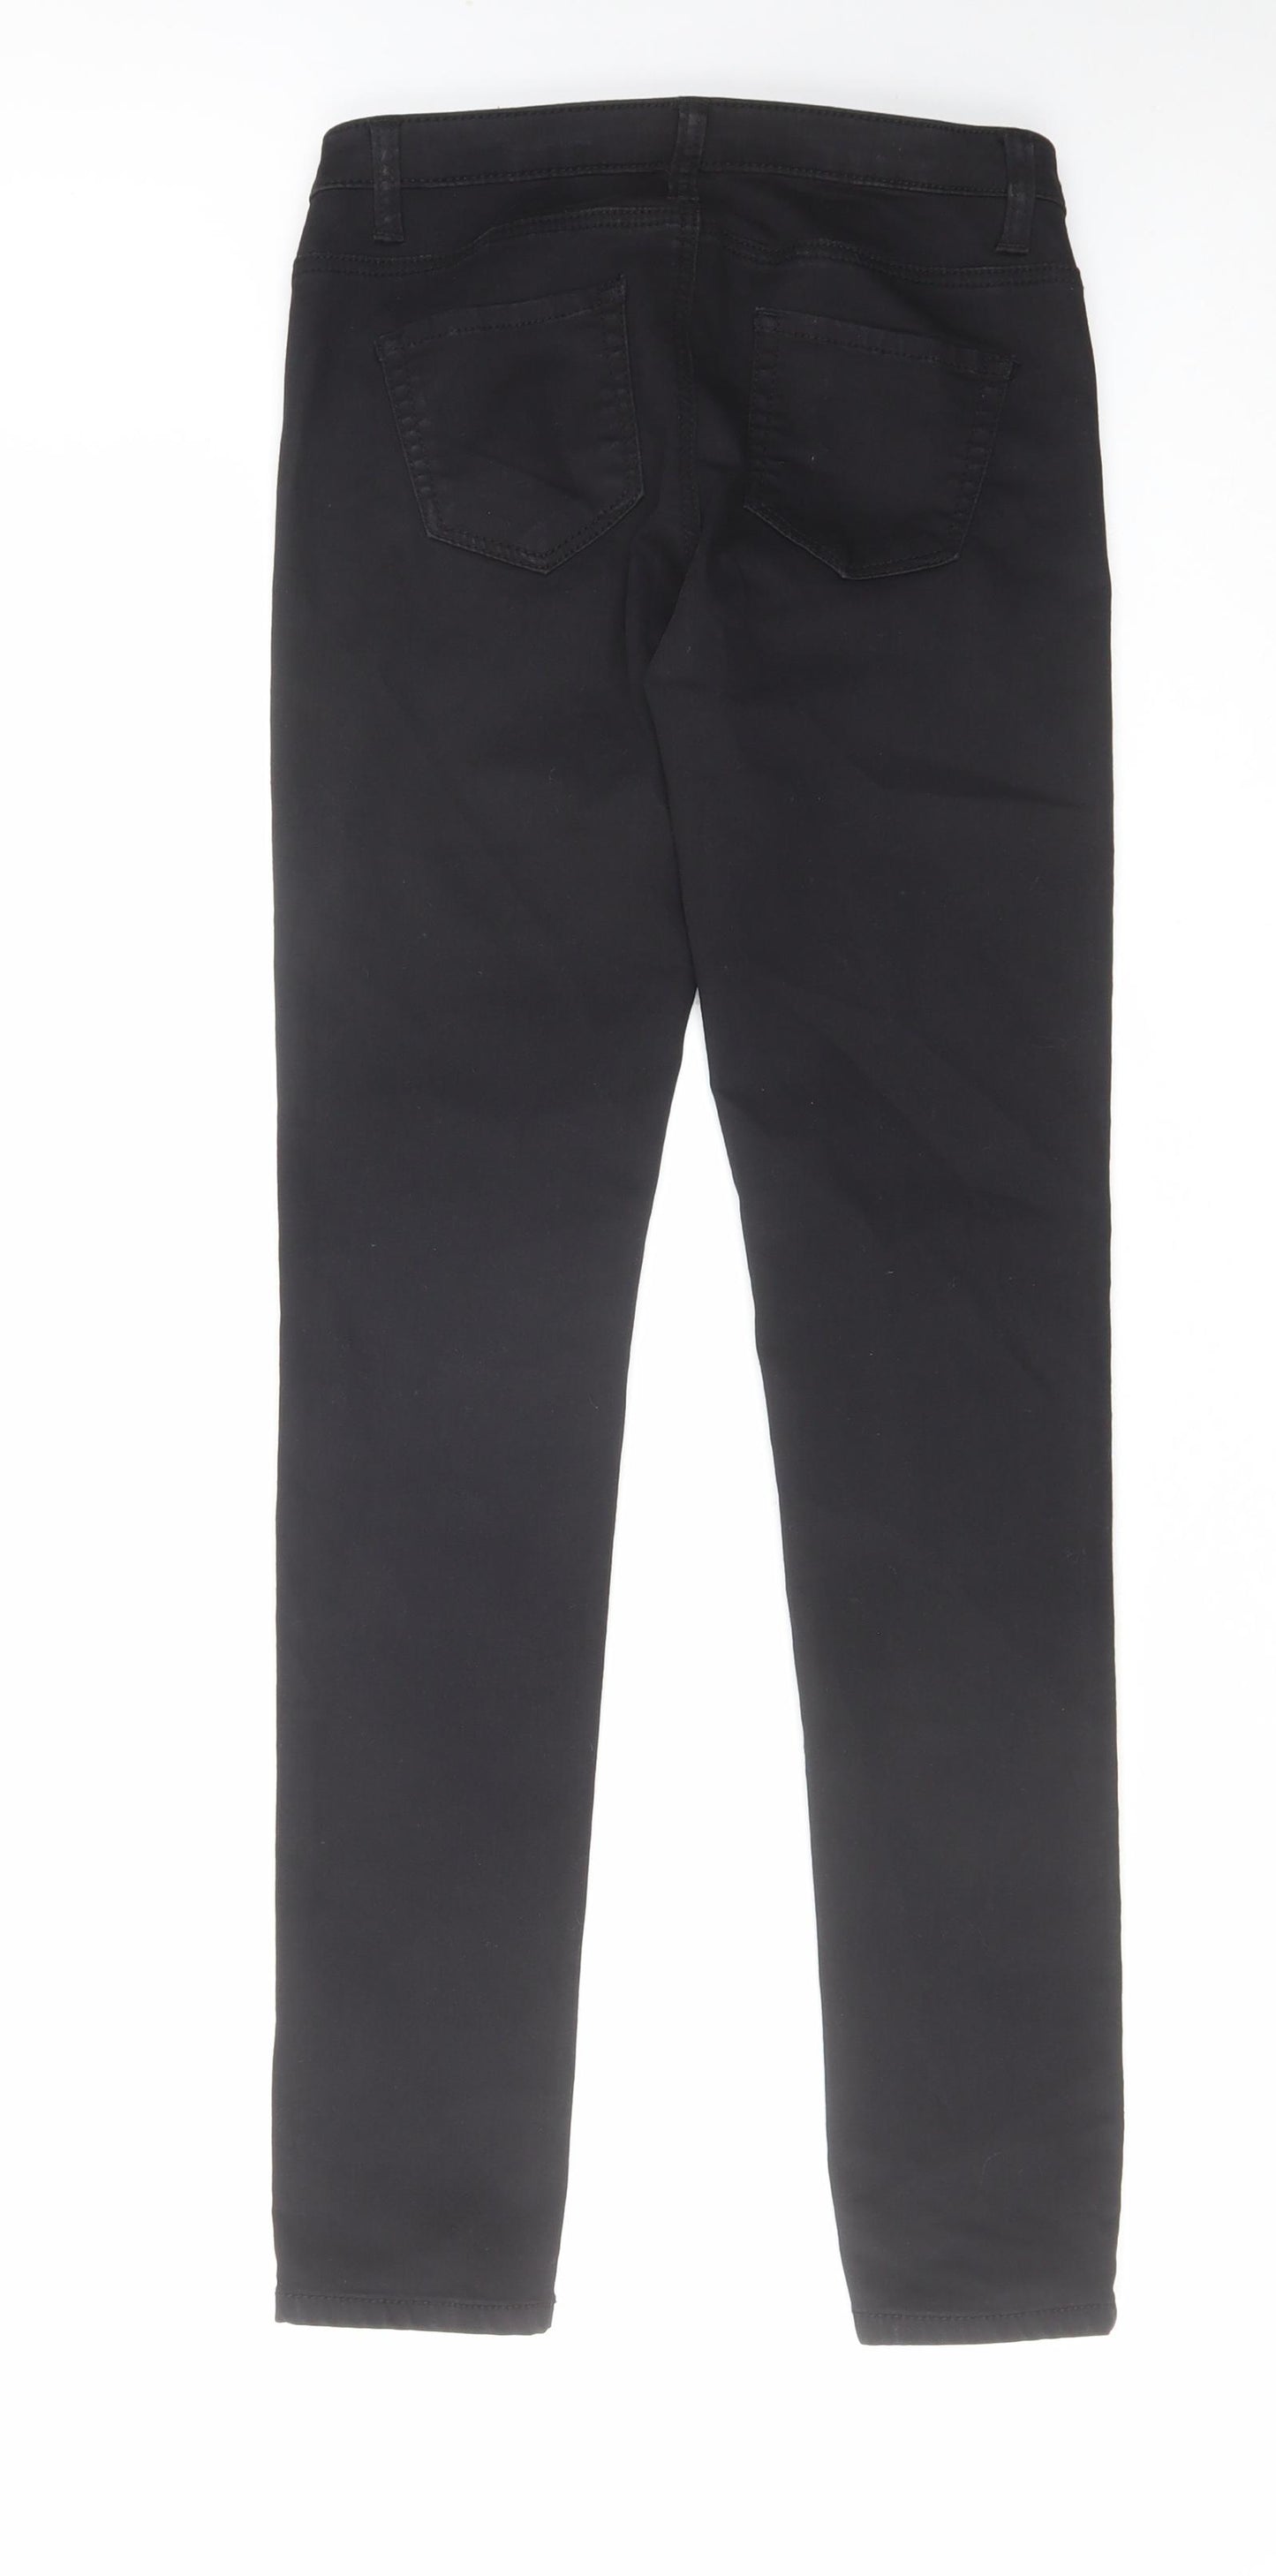 Denim & Co. Womens Black Cotton Skinny Jeans Size 6 L29 in Regular Zip